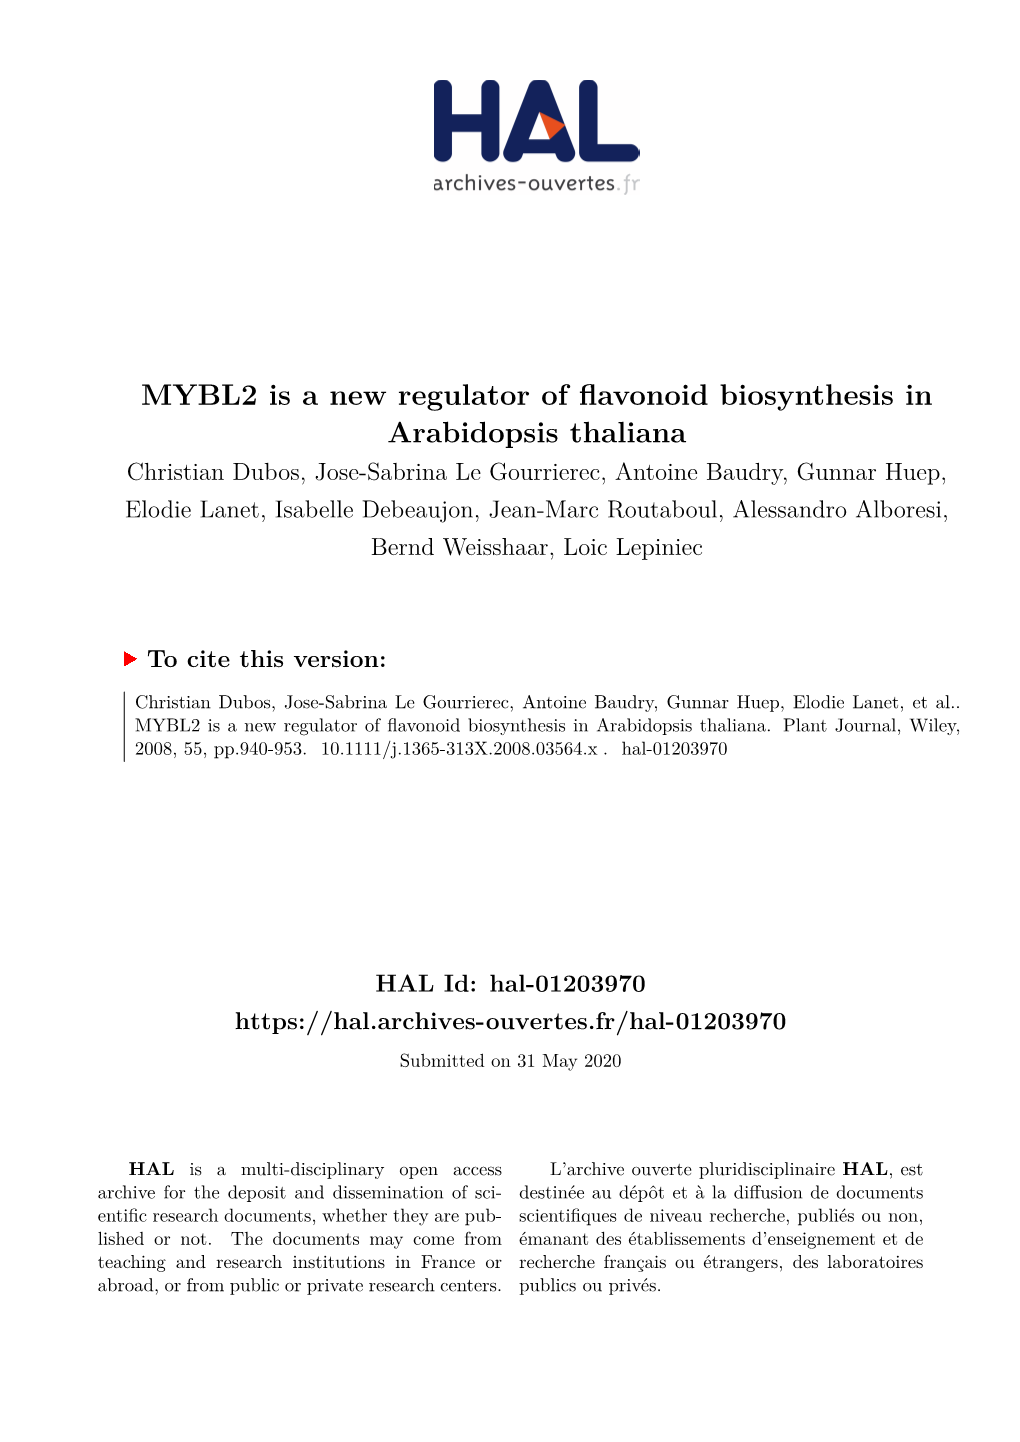 MYBL2 Is a New Regulator of Flavonoid Biosynthesis in Arabidopsis Thaliana